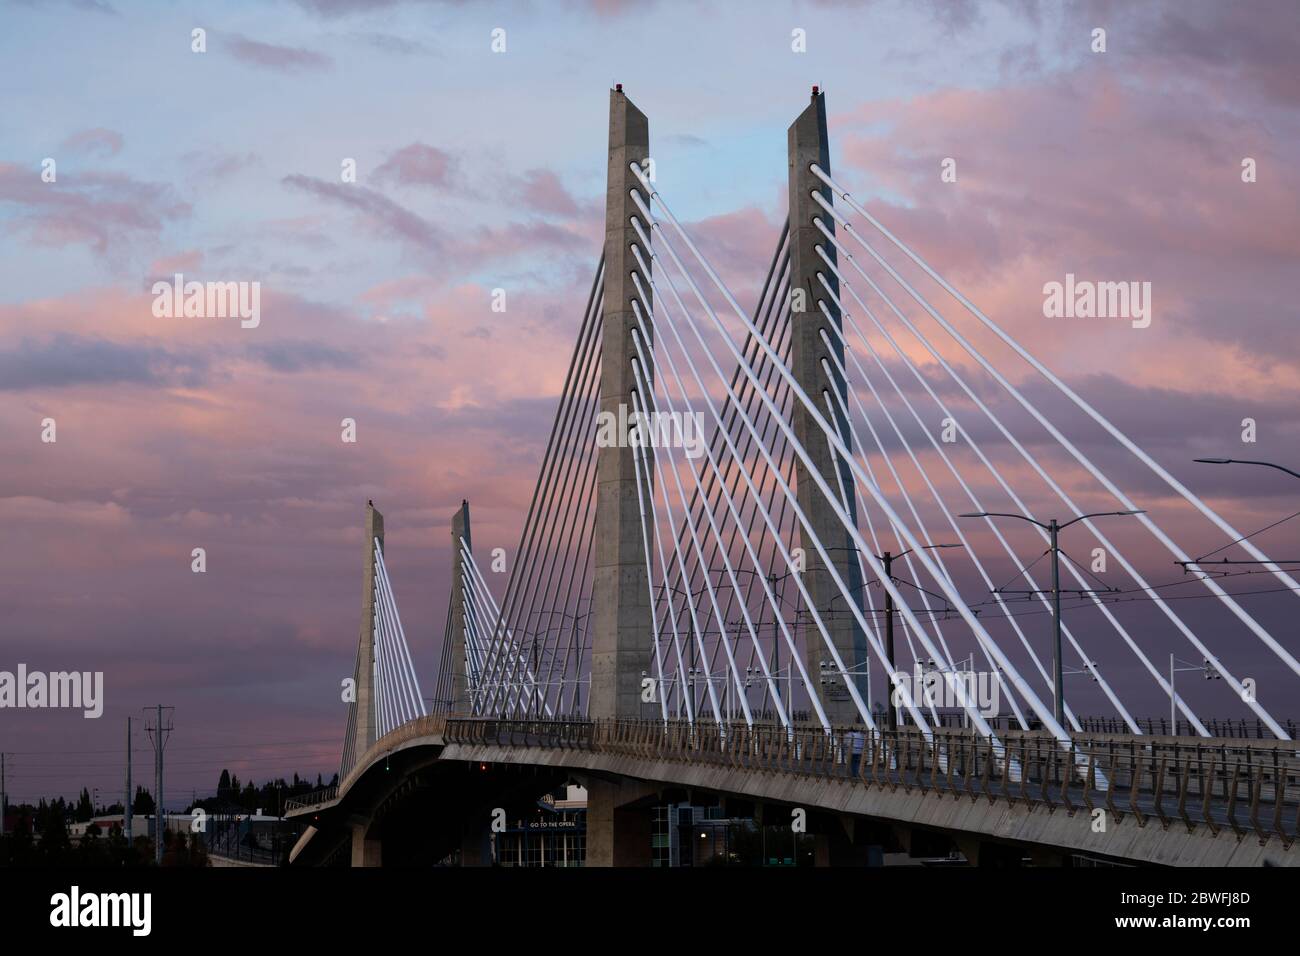 Tilikum Crossing bridge against sky at sunset, Portland, Oregon, USA Stock Photo